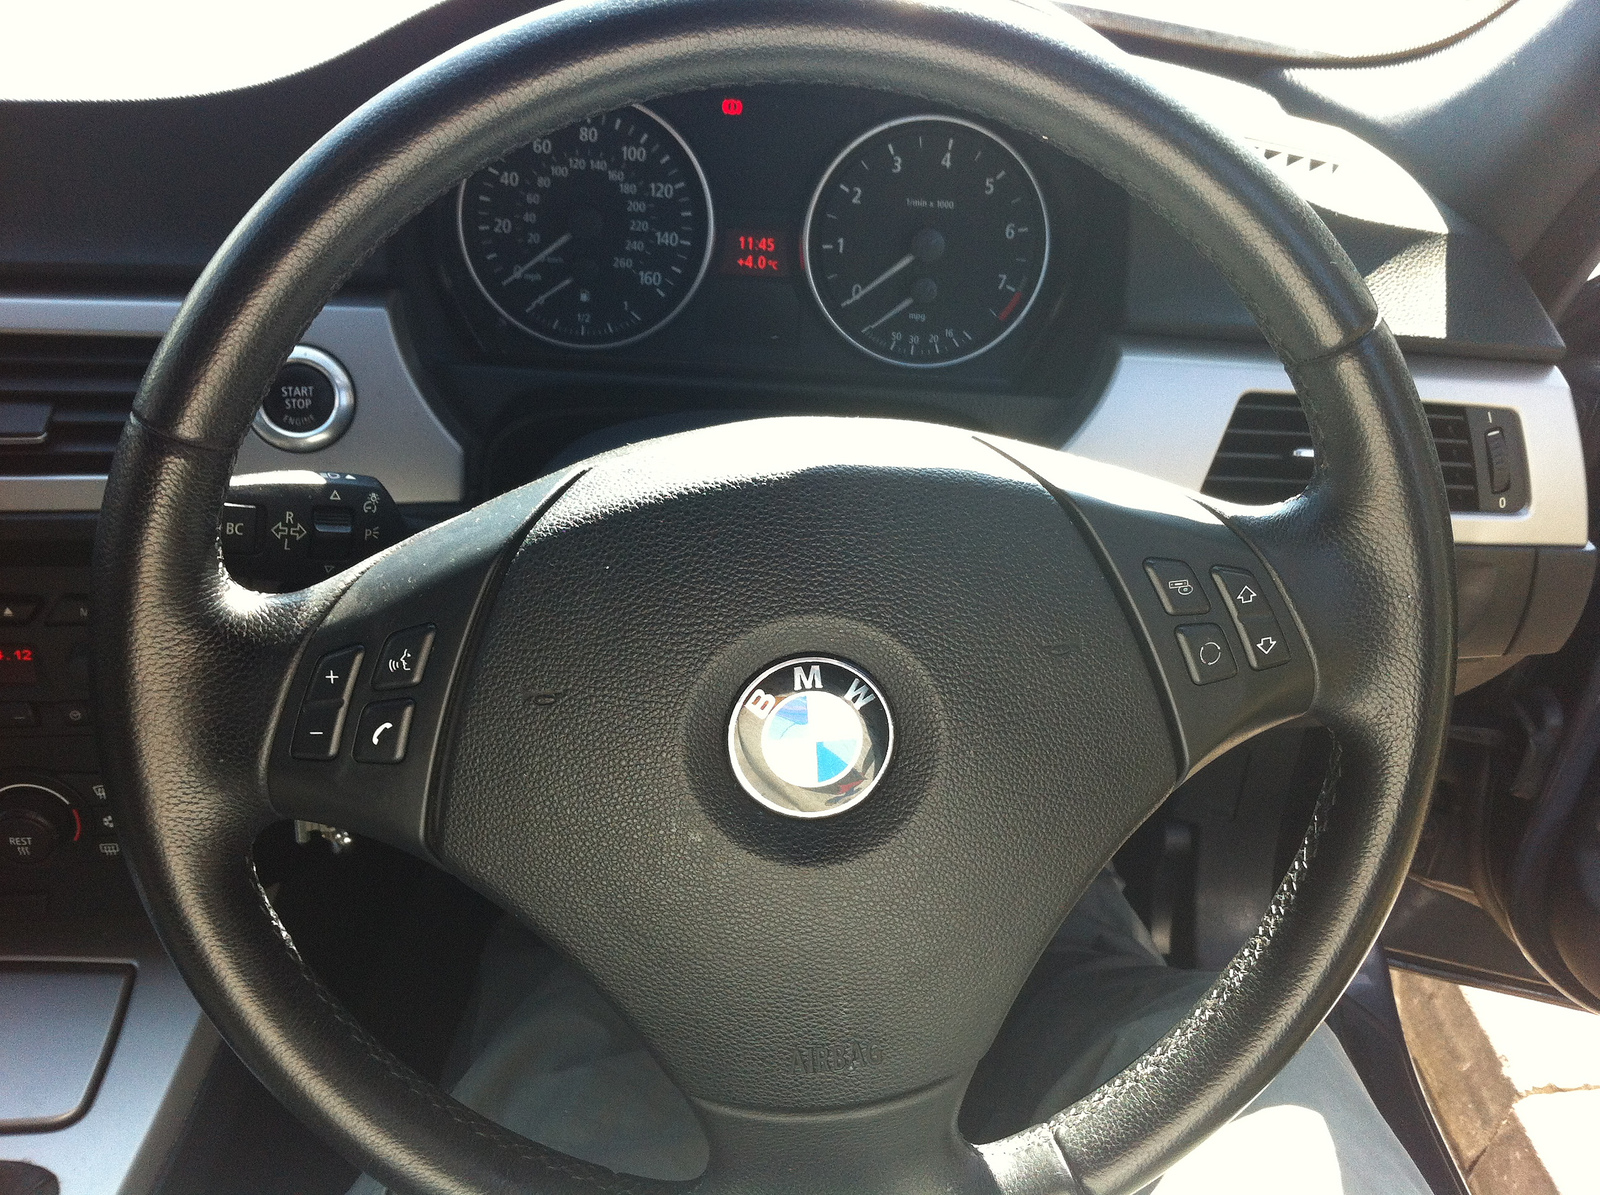 multifunction steering wheel | Flickr - Photo Sharing!